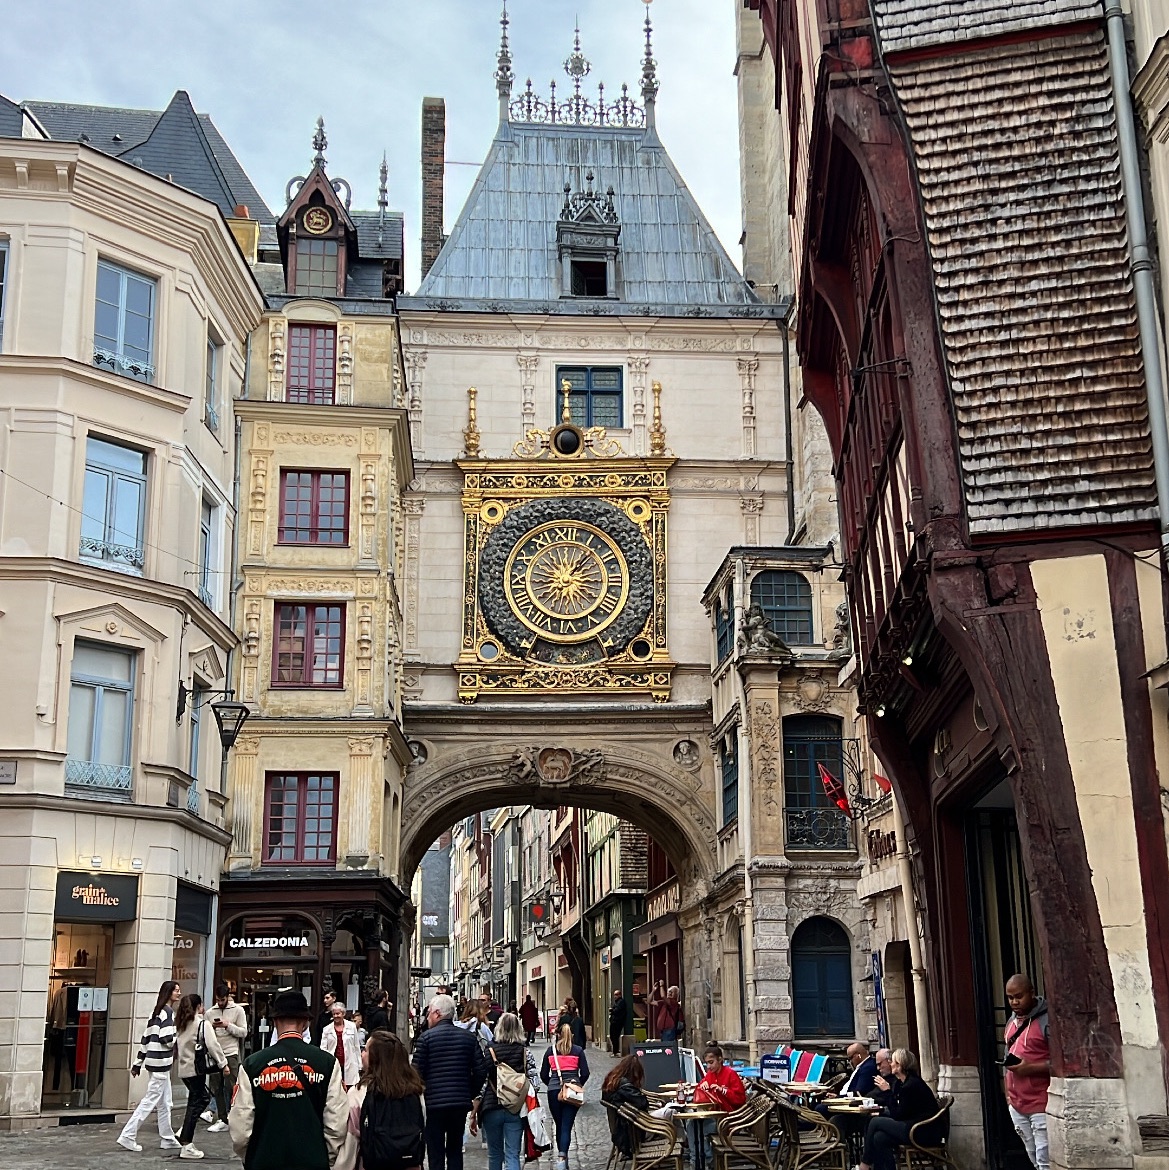 Gros Horloge - Great Clock in Rouen, France | Trip.com Rouen Travelogues